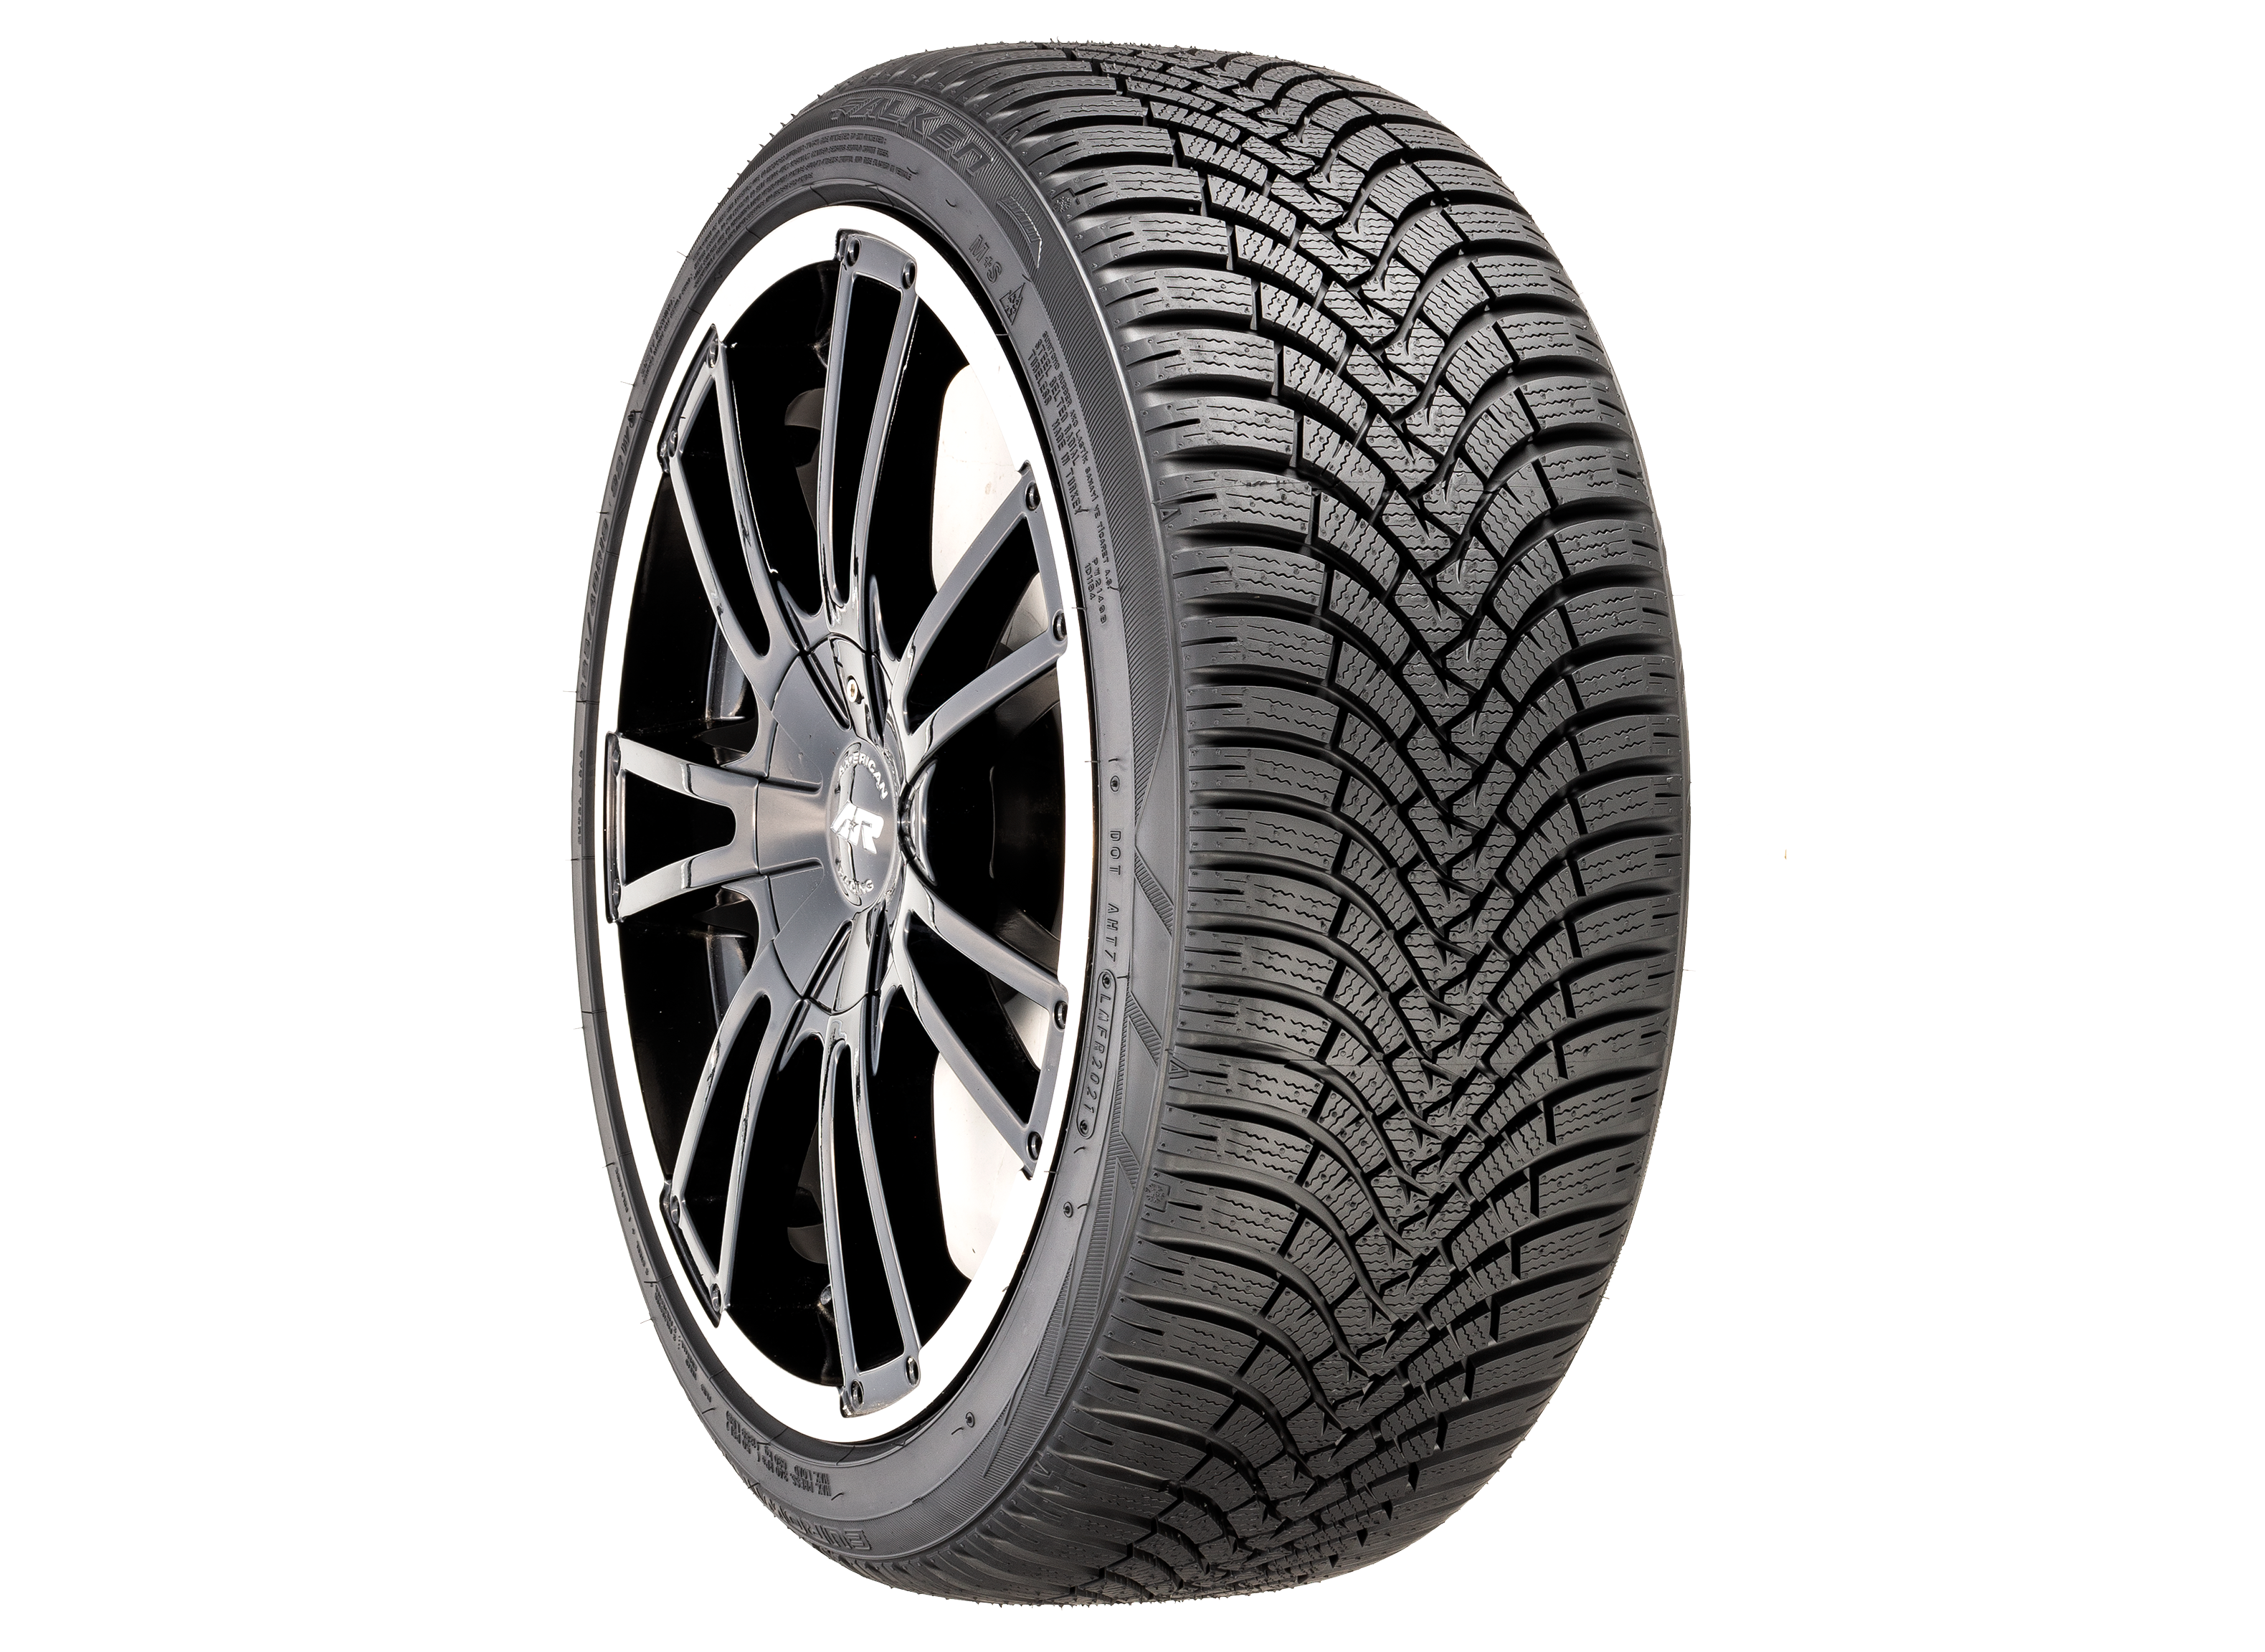 Falken Eurowinter HS01 Reports Consumer - Tire Review